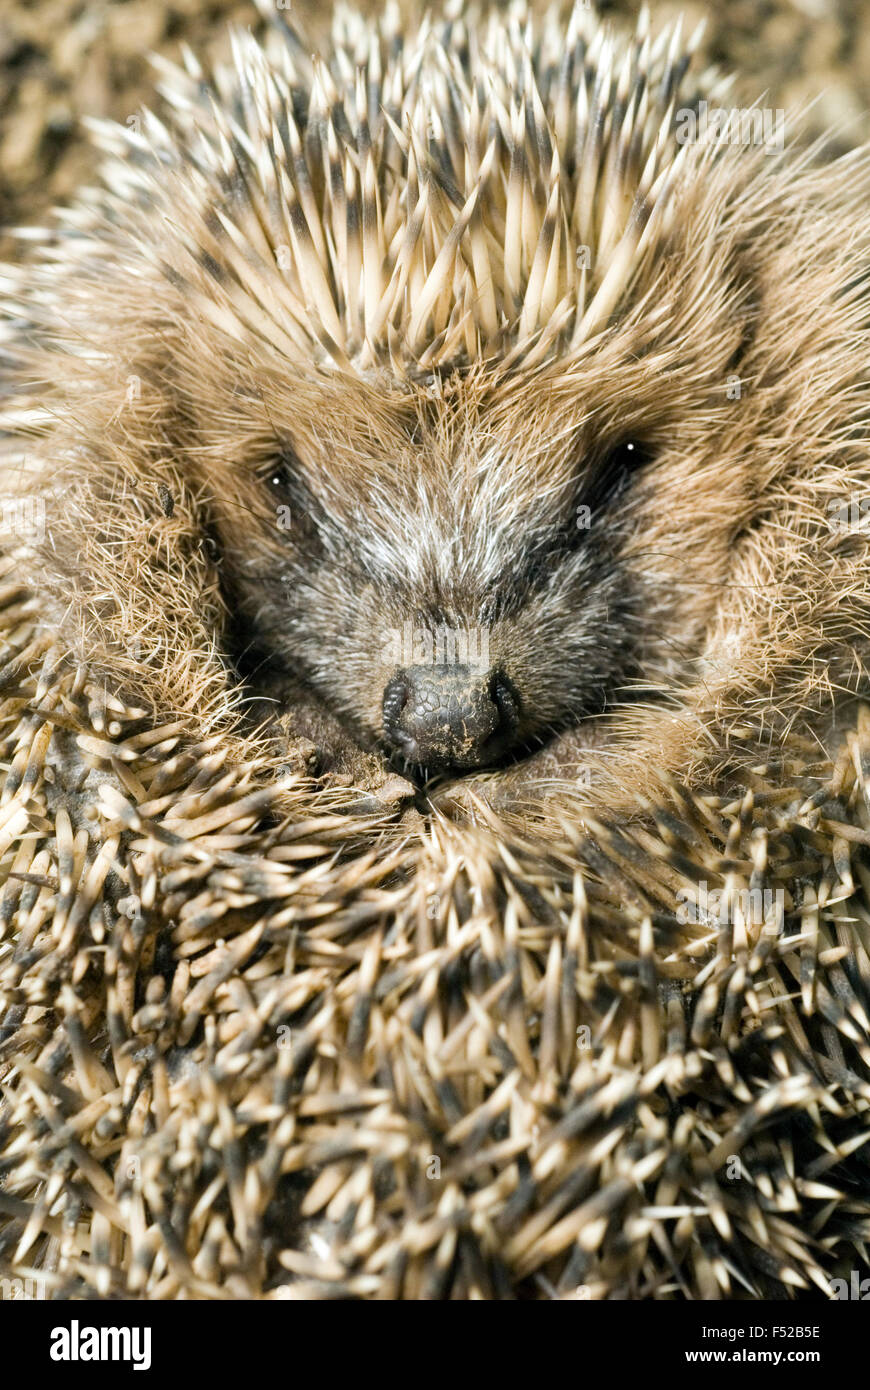 Little Hedgehog (Erinaceus europaeus) rolled up Germany Stock Photo